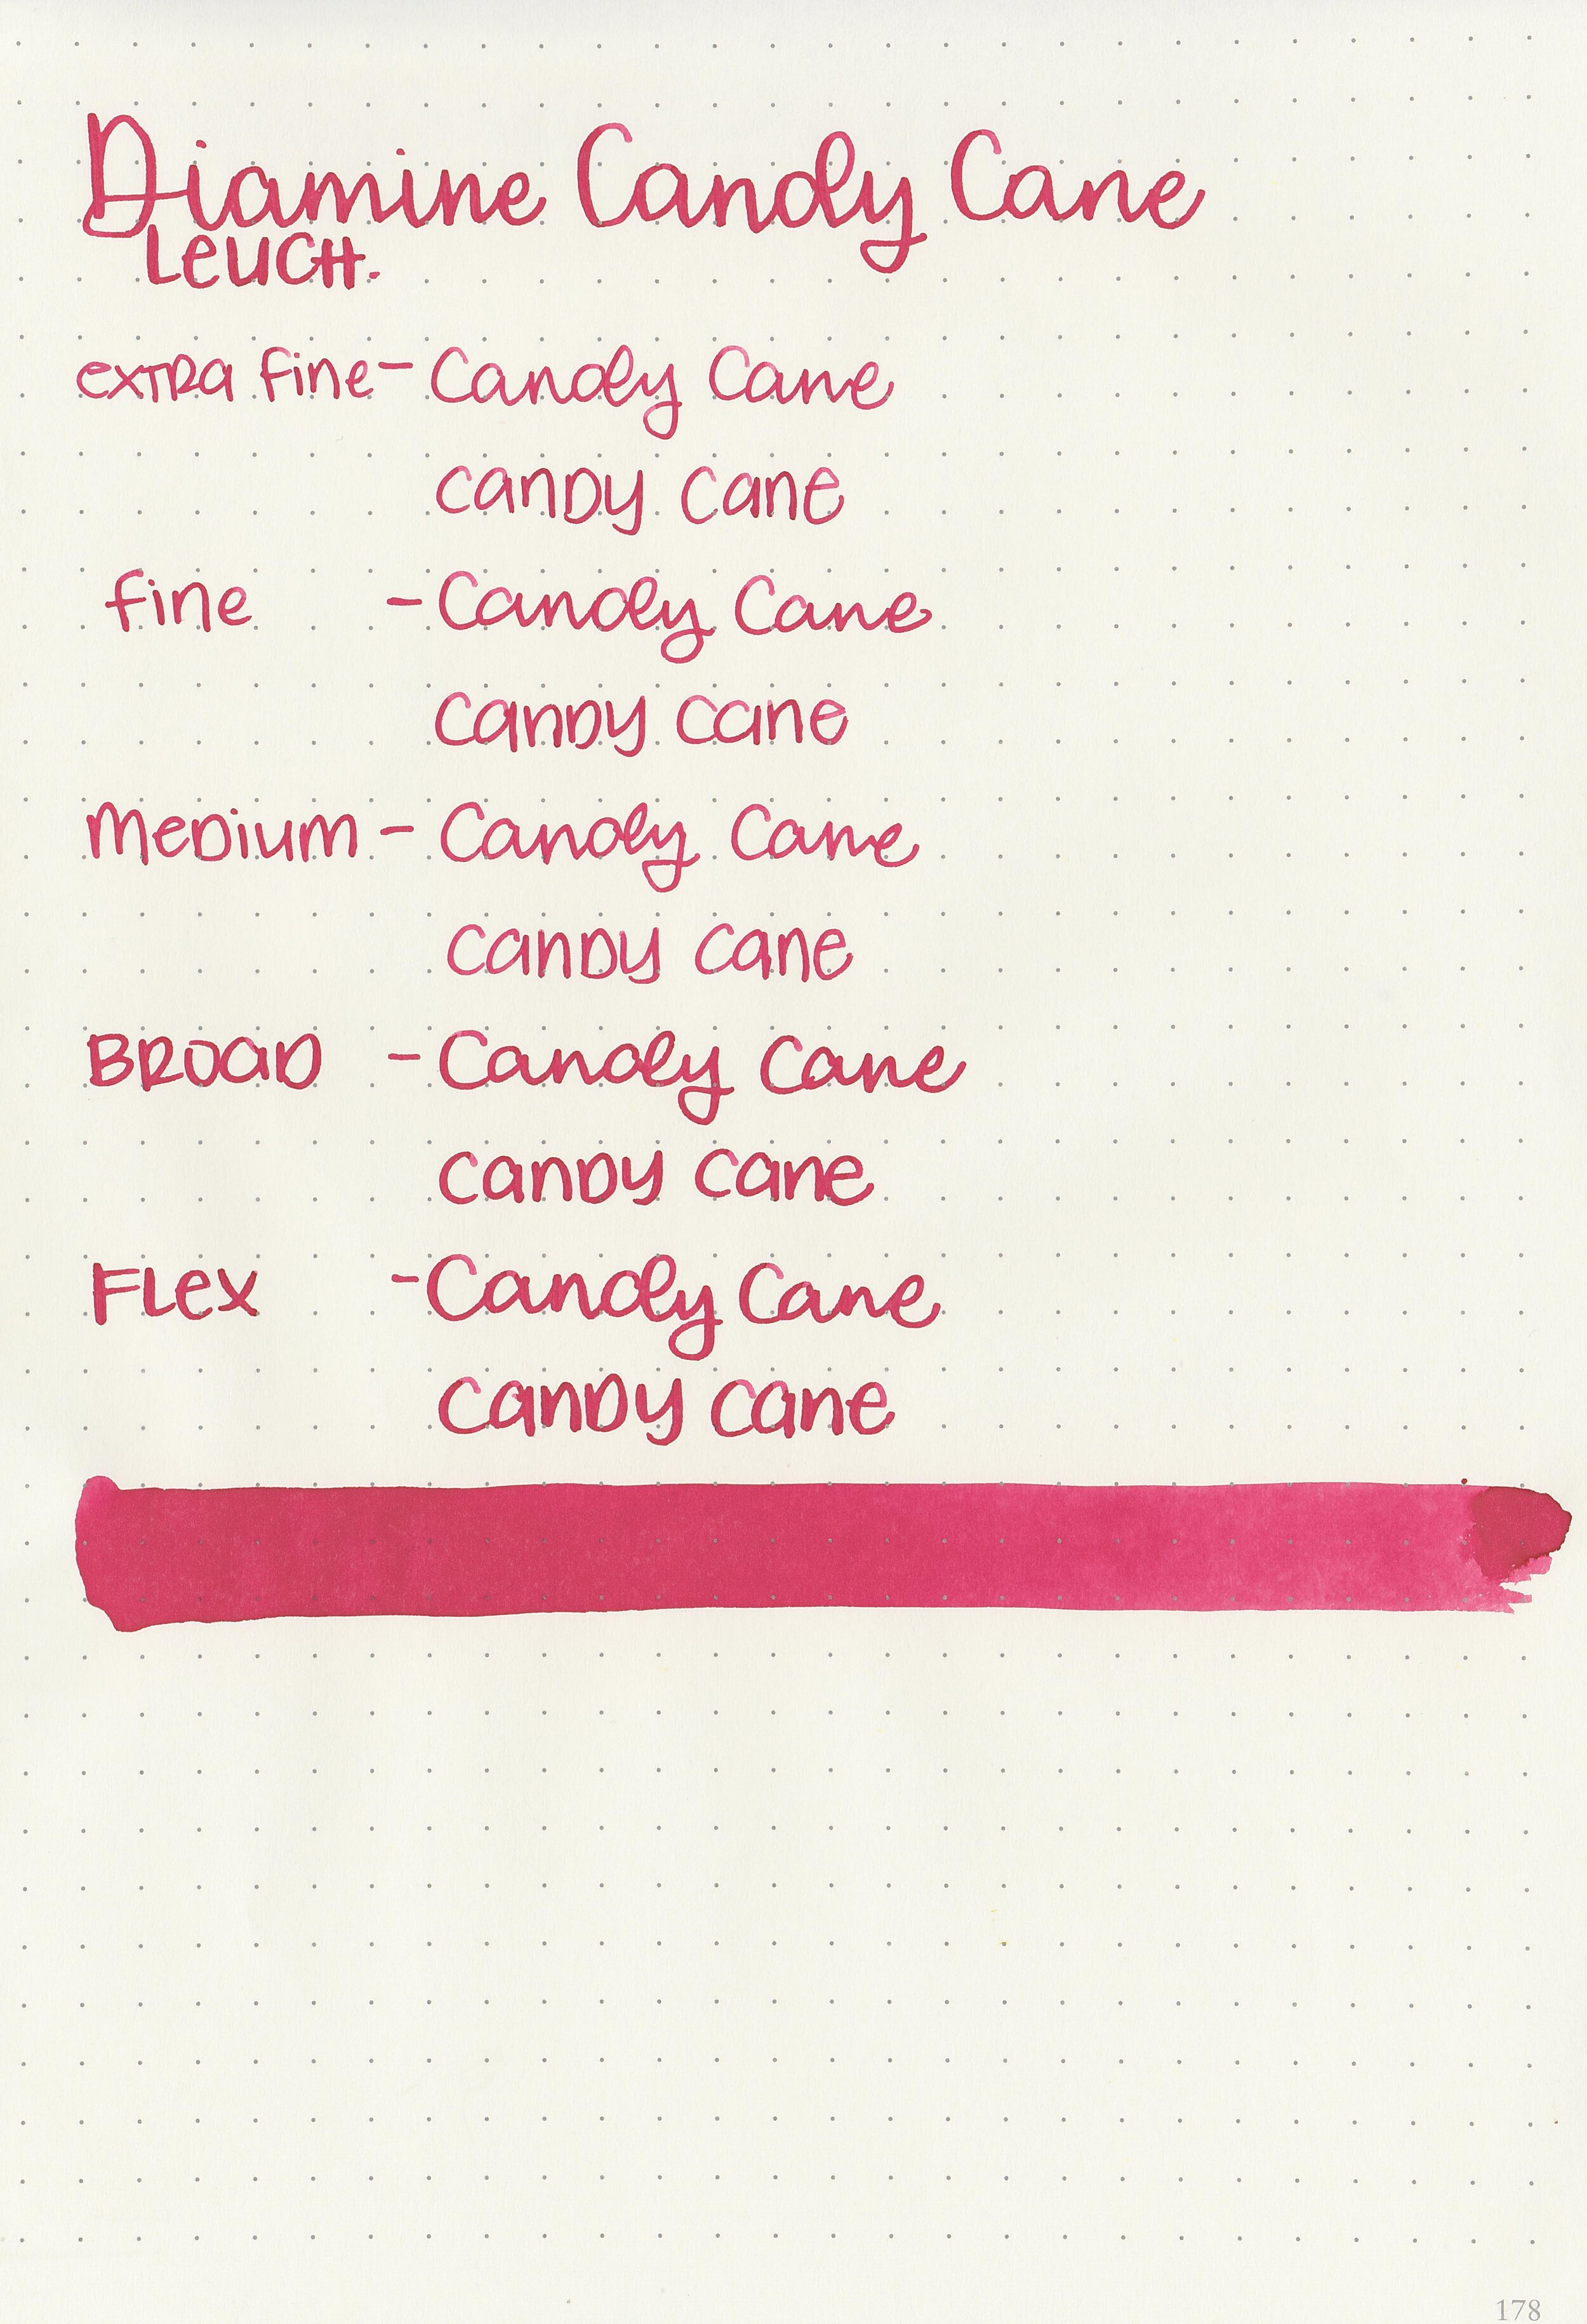 d-candy-cane-9.jpg